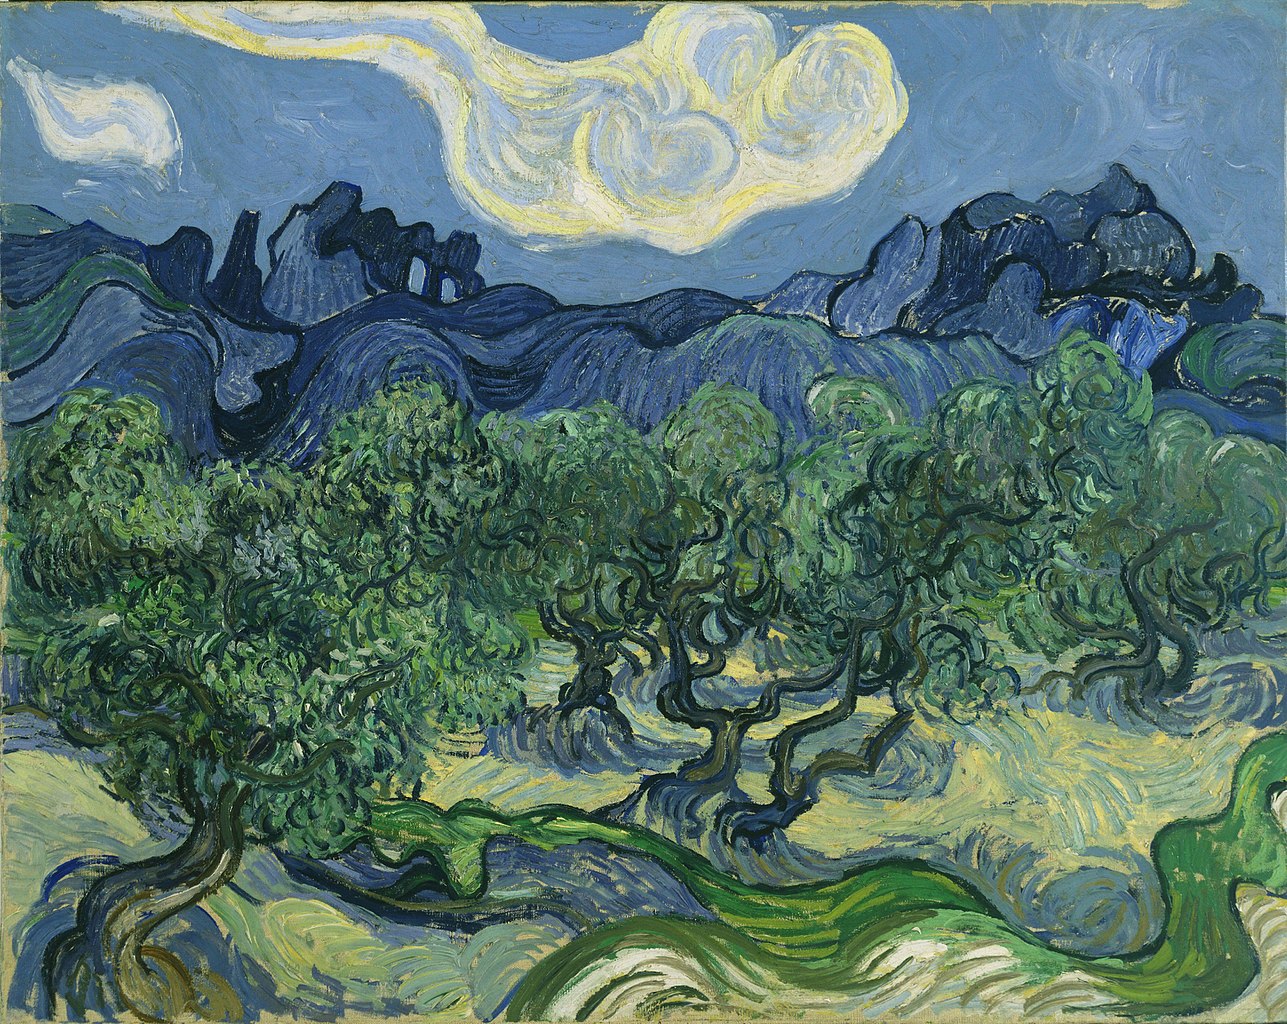 Three Subjects of Van Gogh’s Art